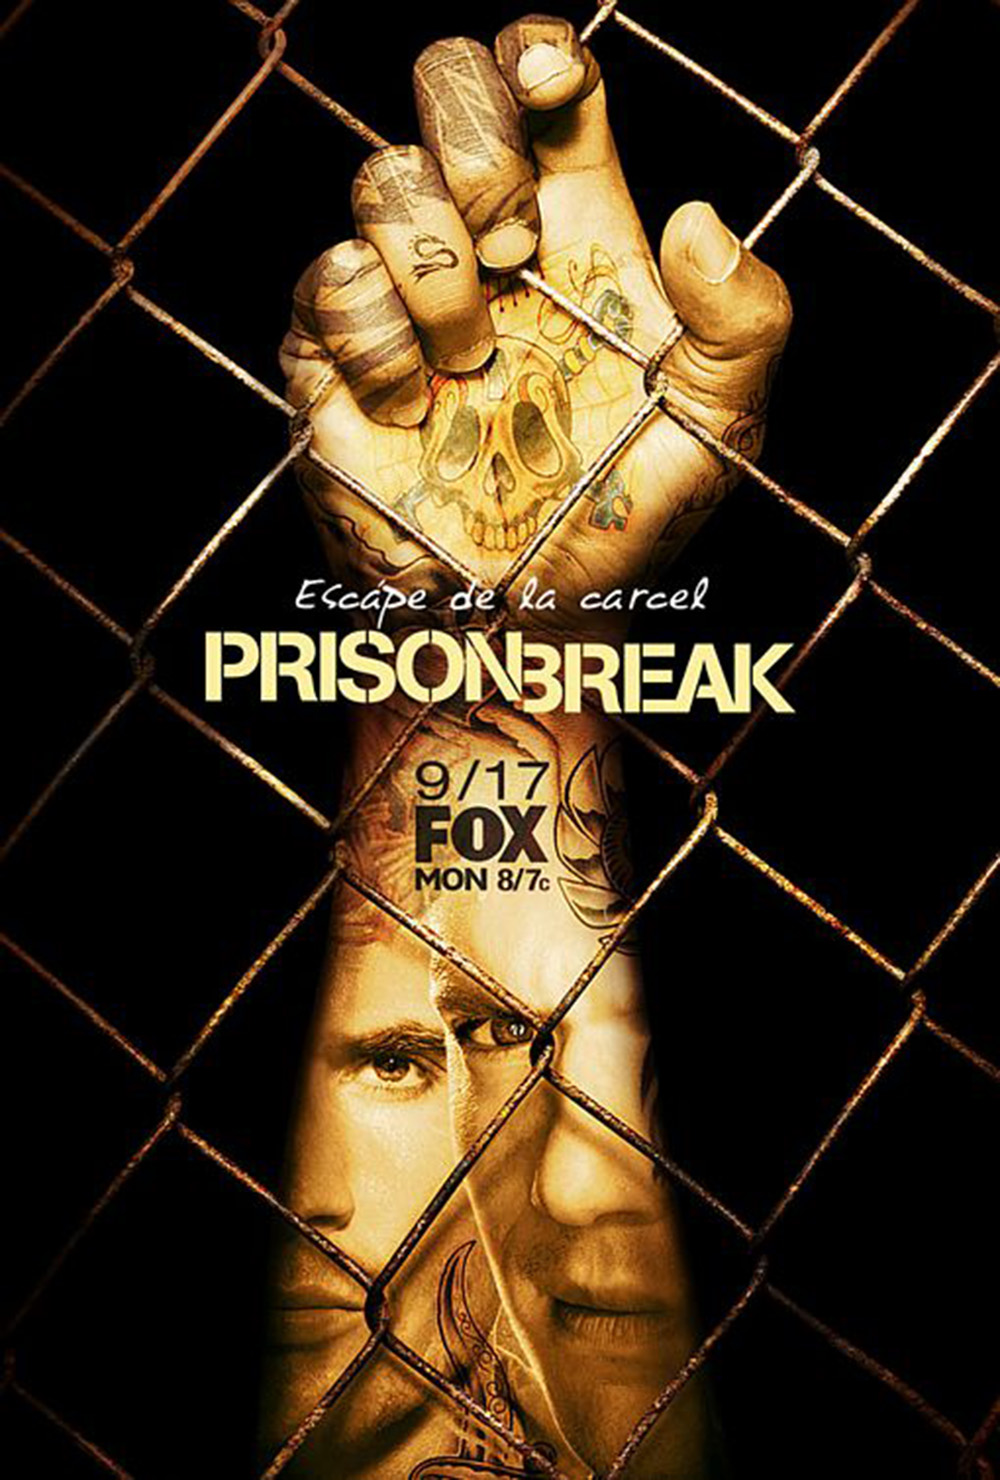 prison break season 3 episodes